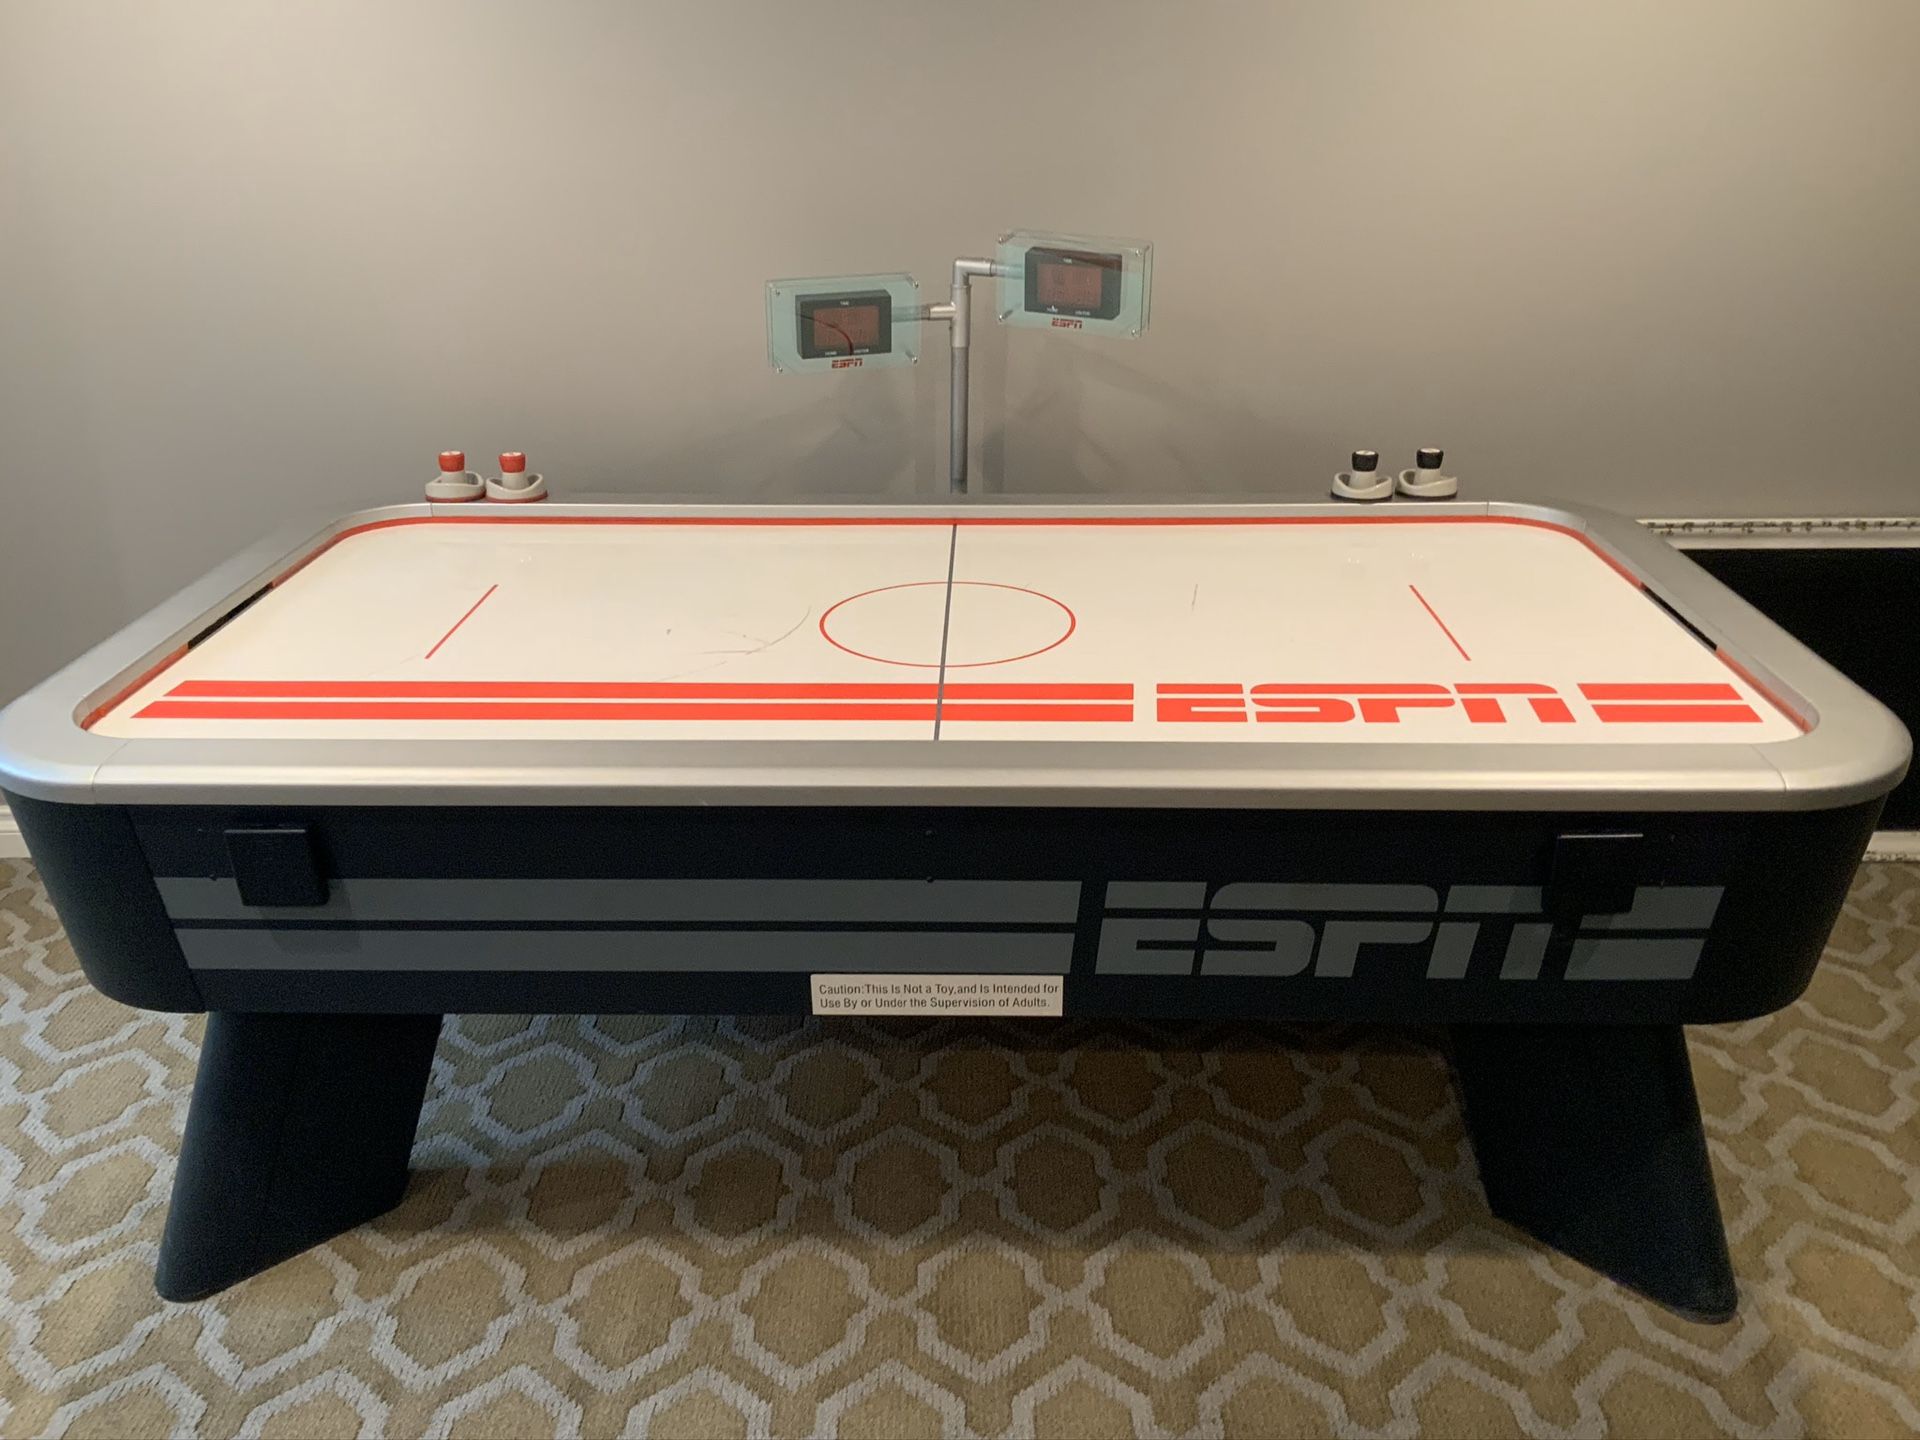 ESPN Sports Air Hockey Game Table & Matching Foosball Table - Soccer Hockey Football Game Room Man Cave Entertainment